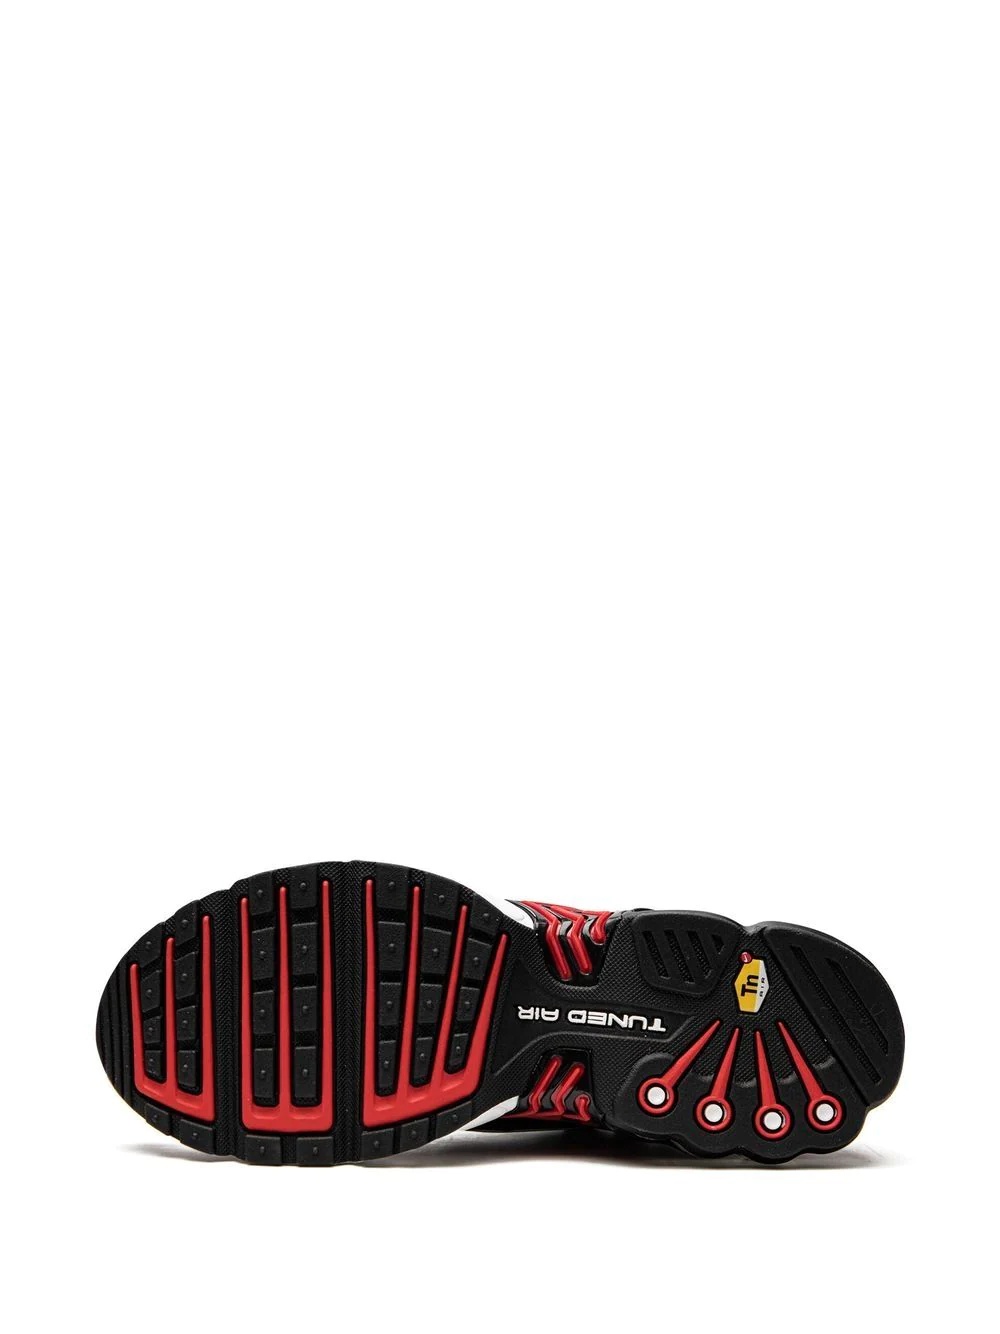 Air Max Plus III "Black/University Red/White" sneakers - 4